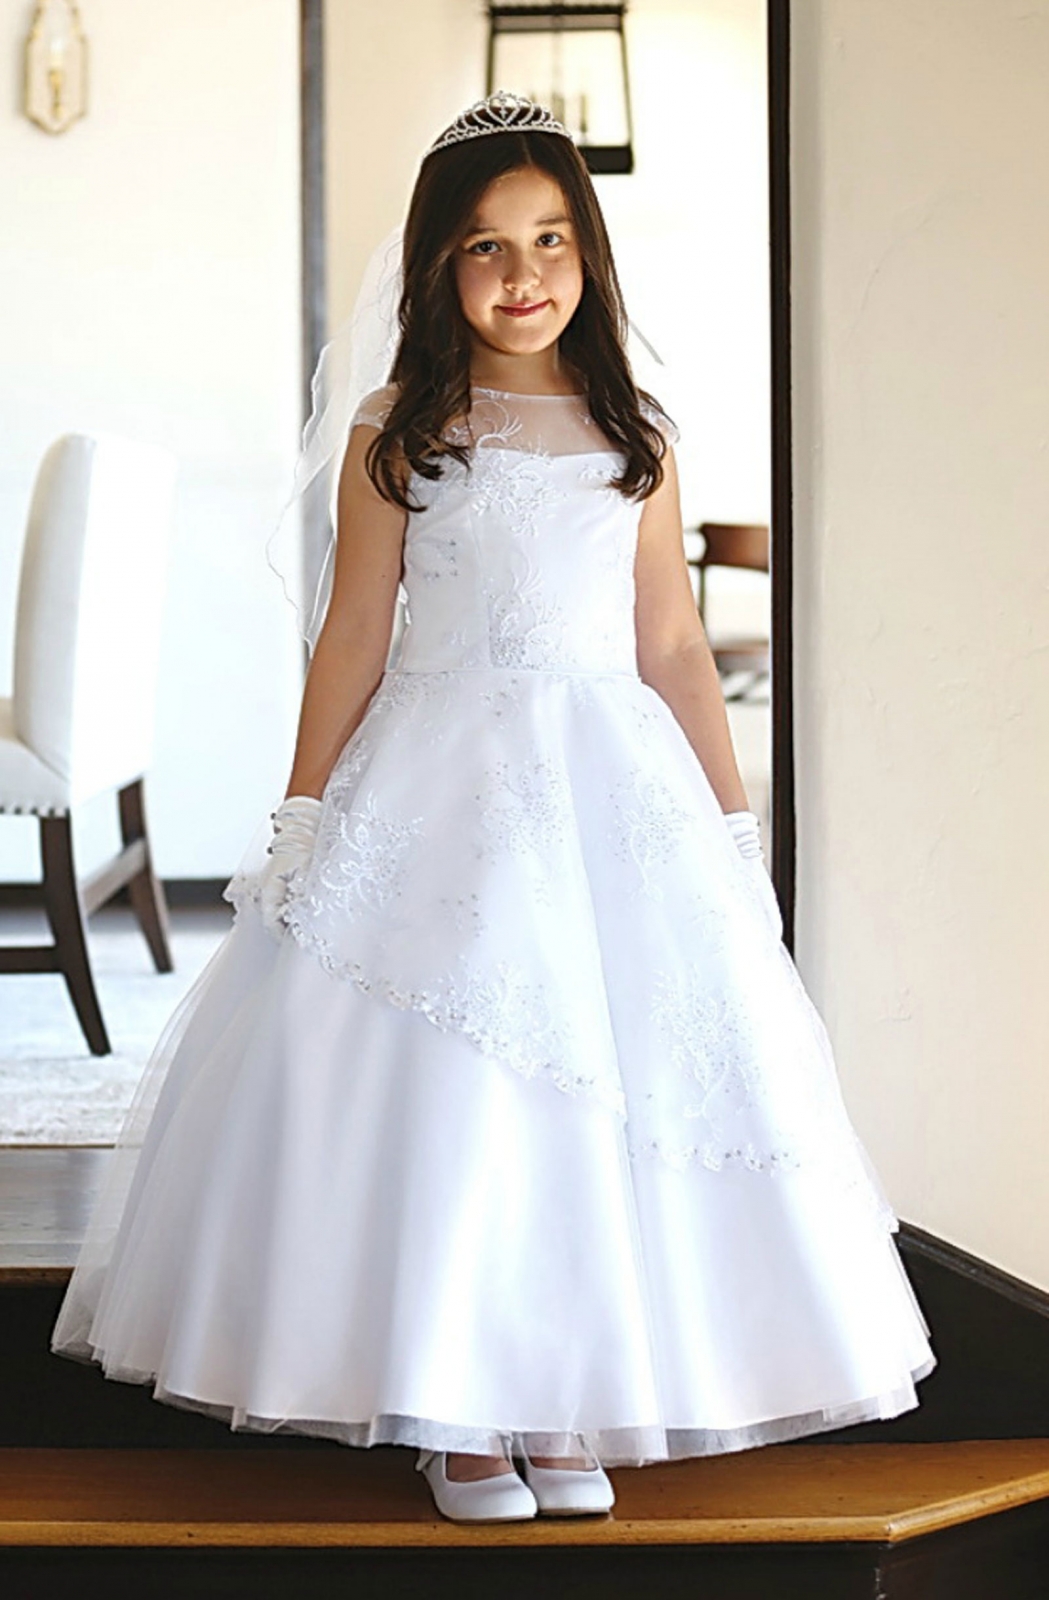 Paper Cut Pattern Festive Dress ELODIE Girls Communion Dress School Dress Size 8692-146152 with Photo Guide